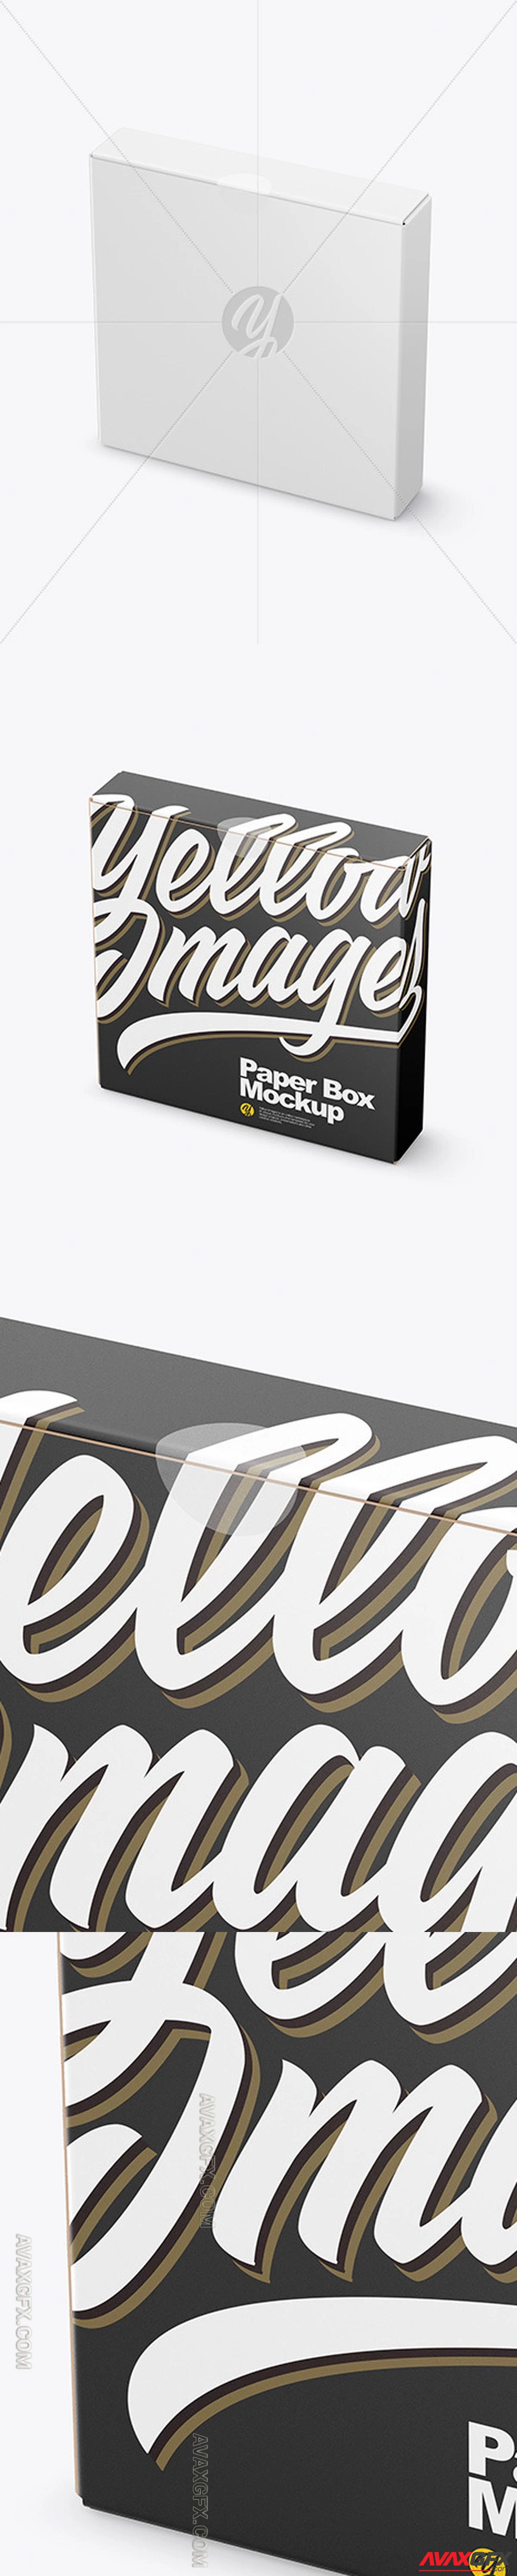 Paper Box Mockup 48750